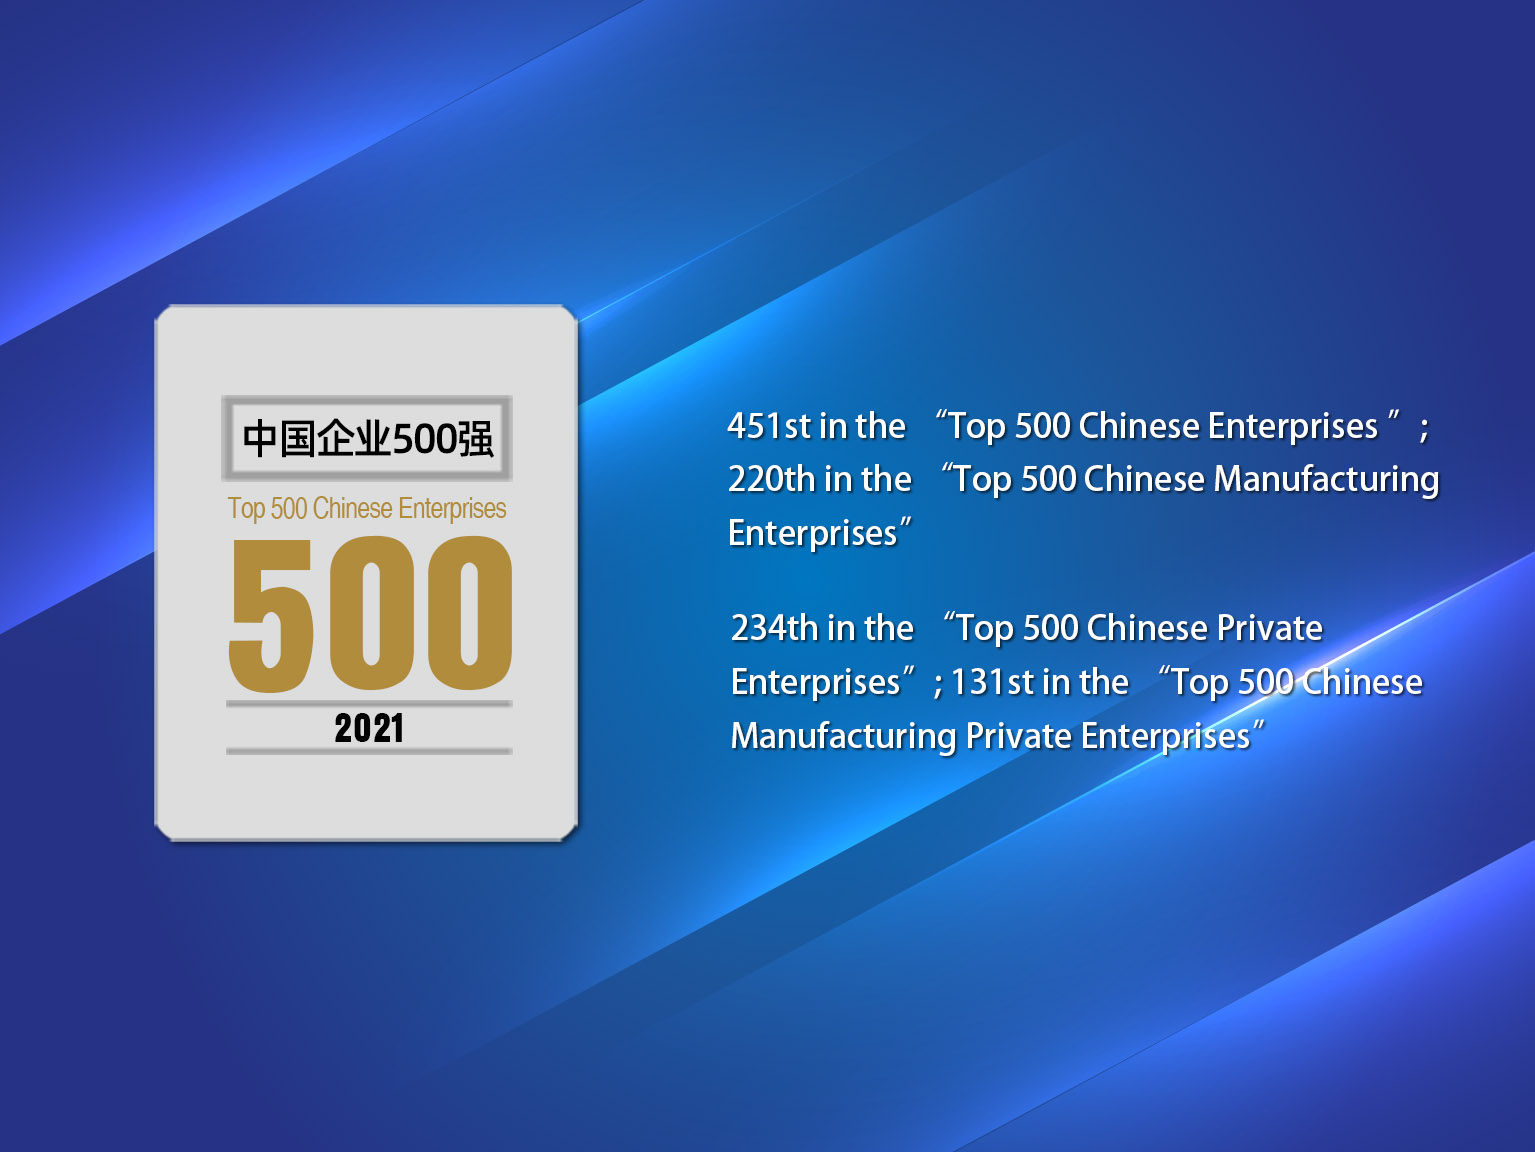 Hongwang Holding Group ranks 451st in the 2021 Top 500 Chinese Enterprises